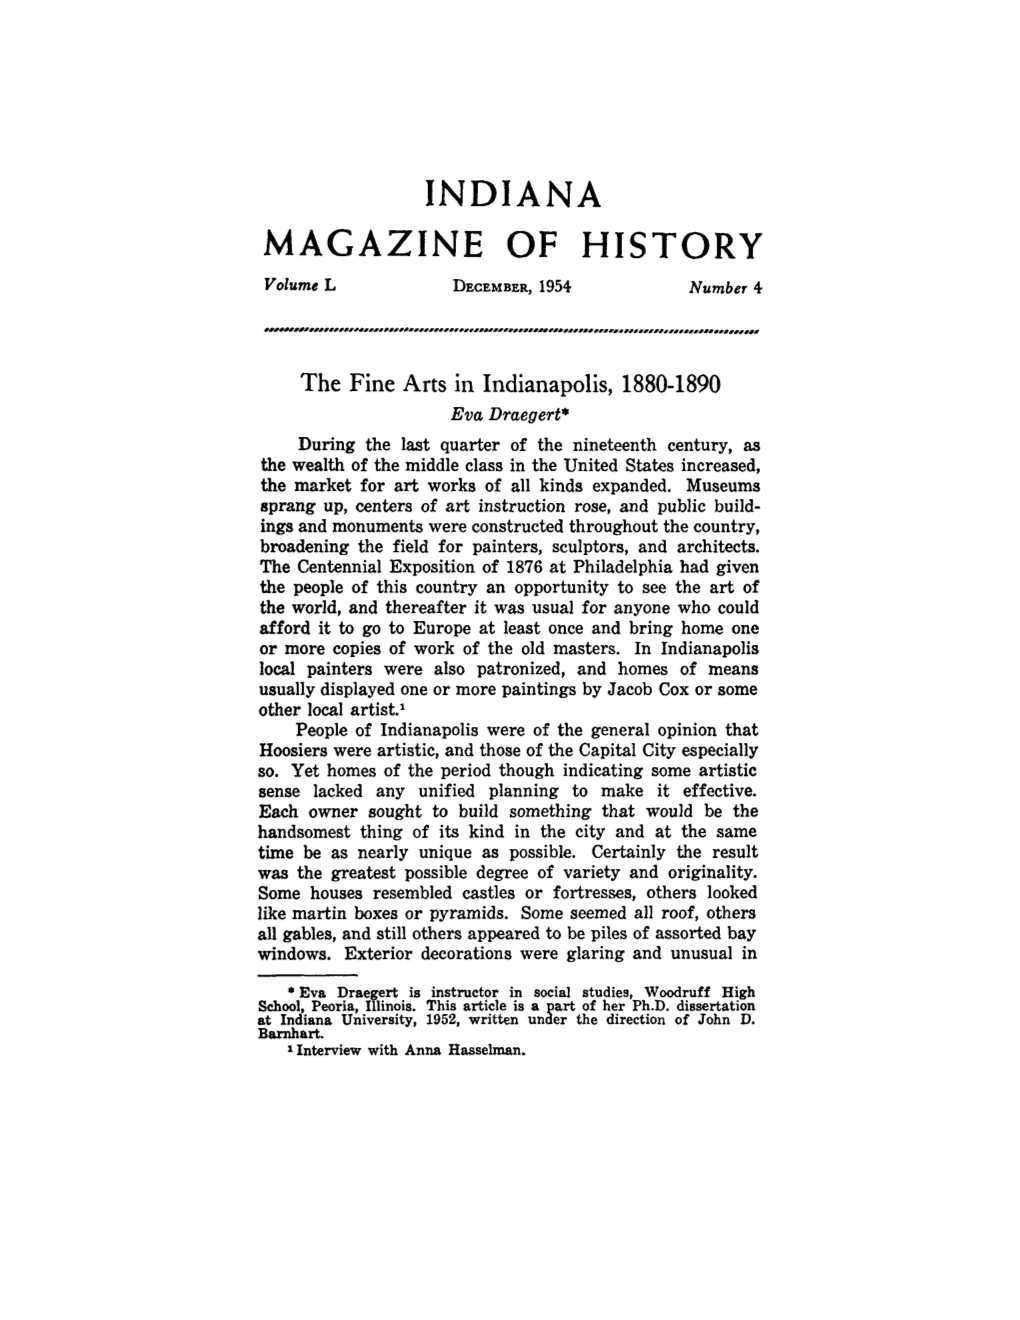 INDIANA MAGAZINE of HISTORY Volume L DECEMBER,1954 Number 4